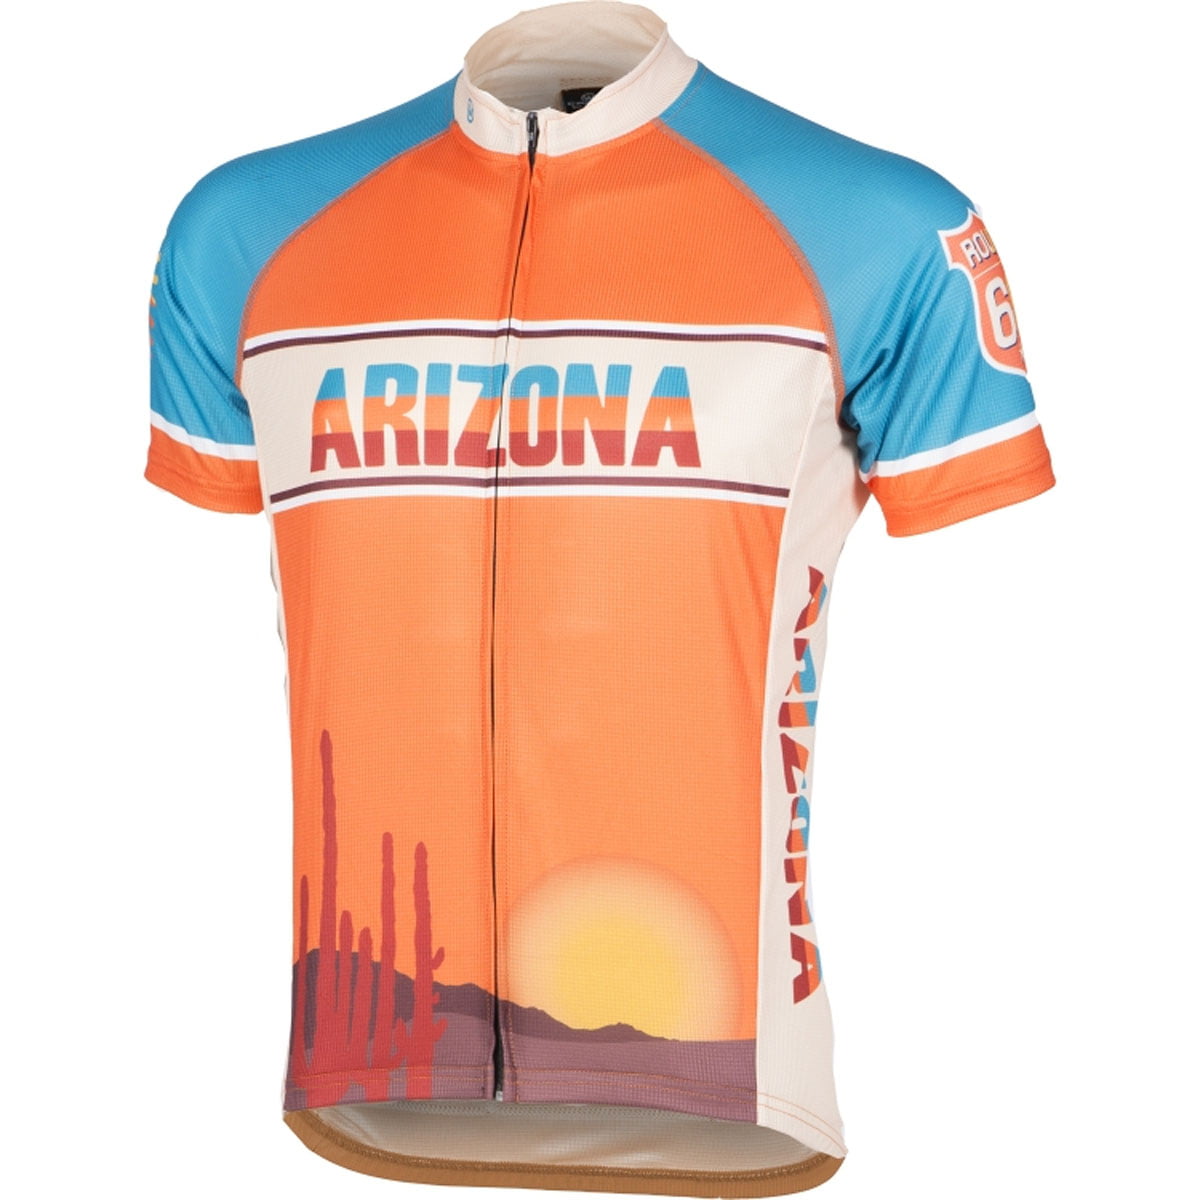 Arizona Retro Cycling Jersey 